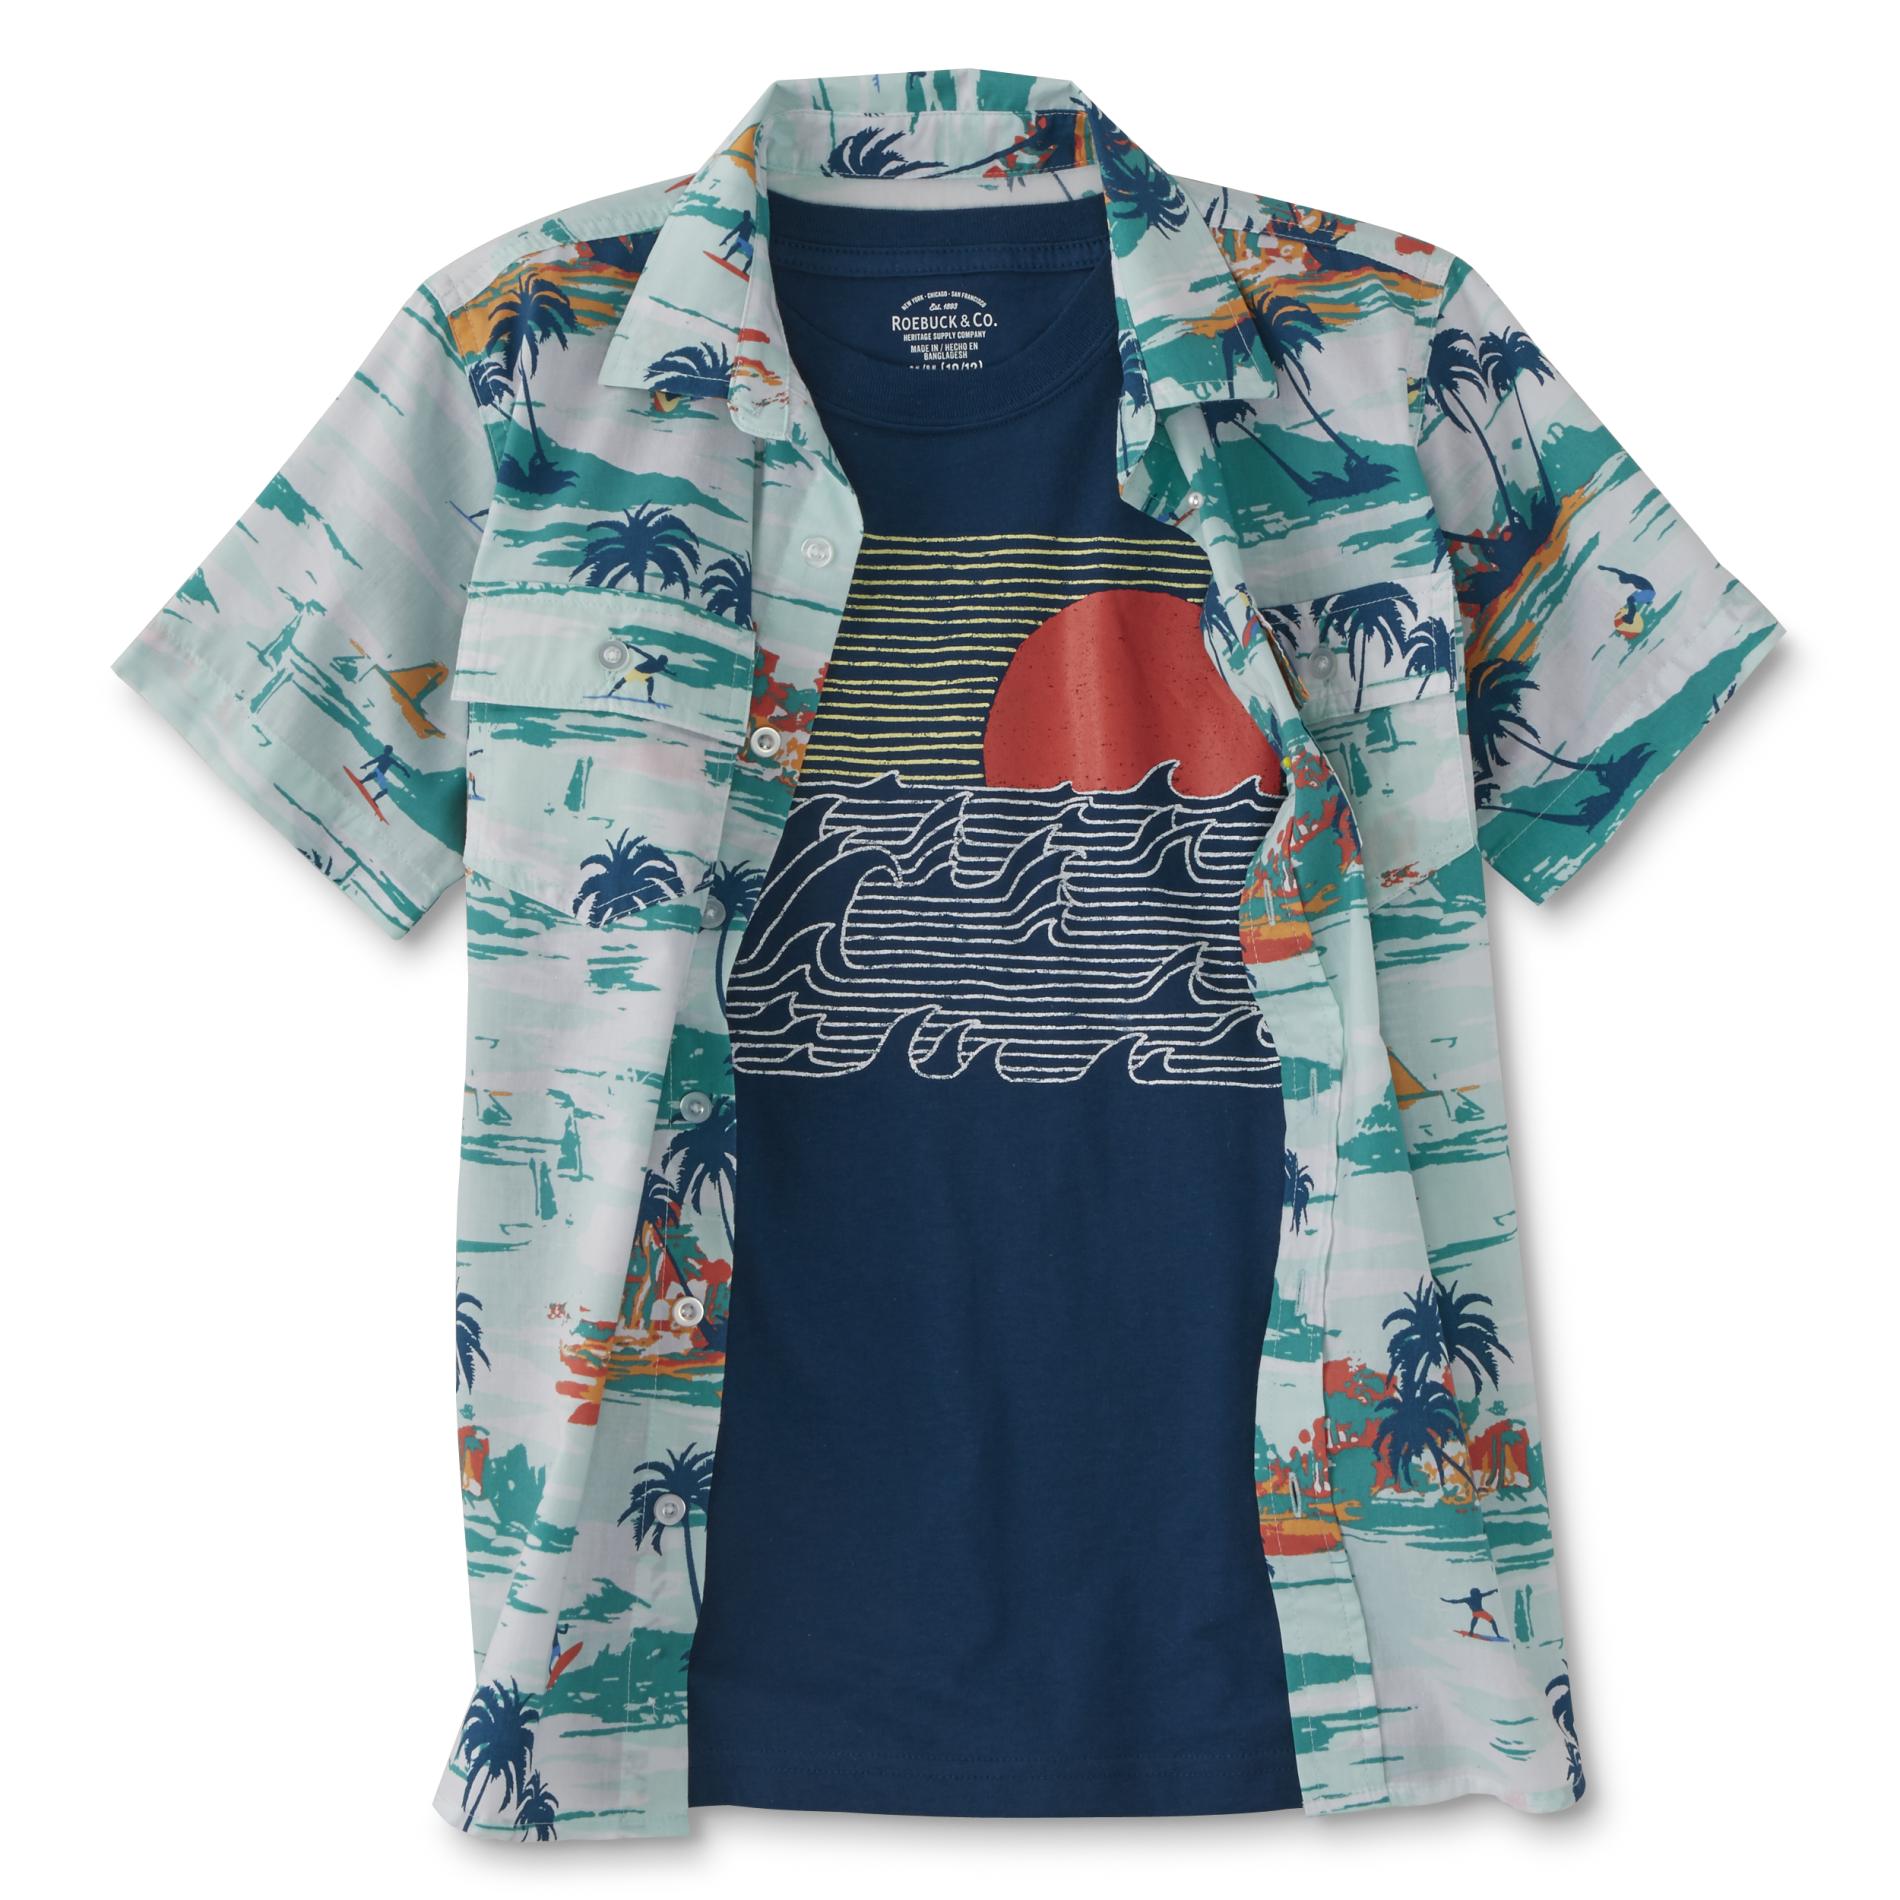 Roebuck & Co. Boys' Camp Shirt & Graphic T-Shirt - Surfer